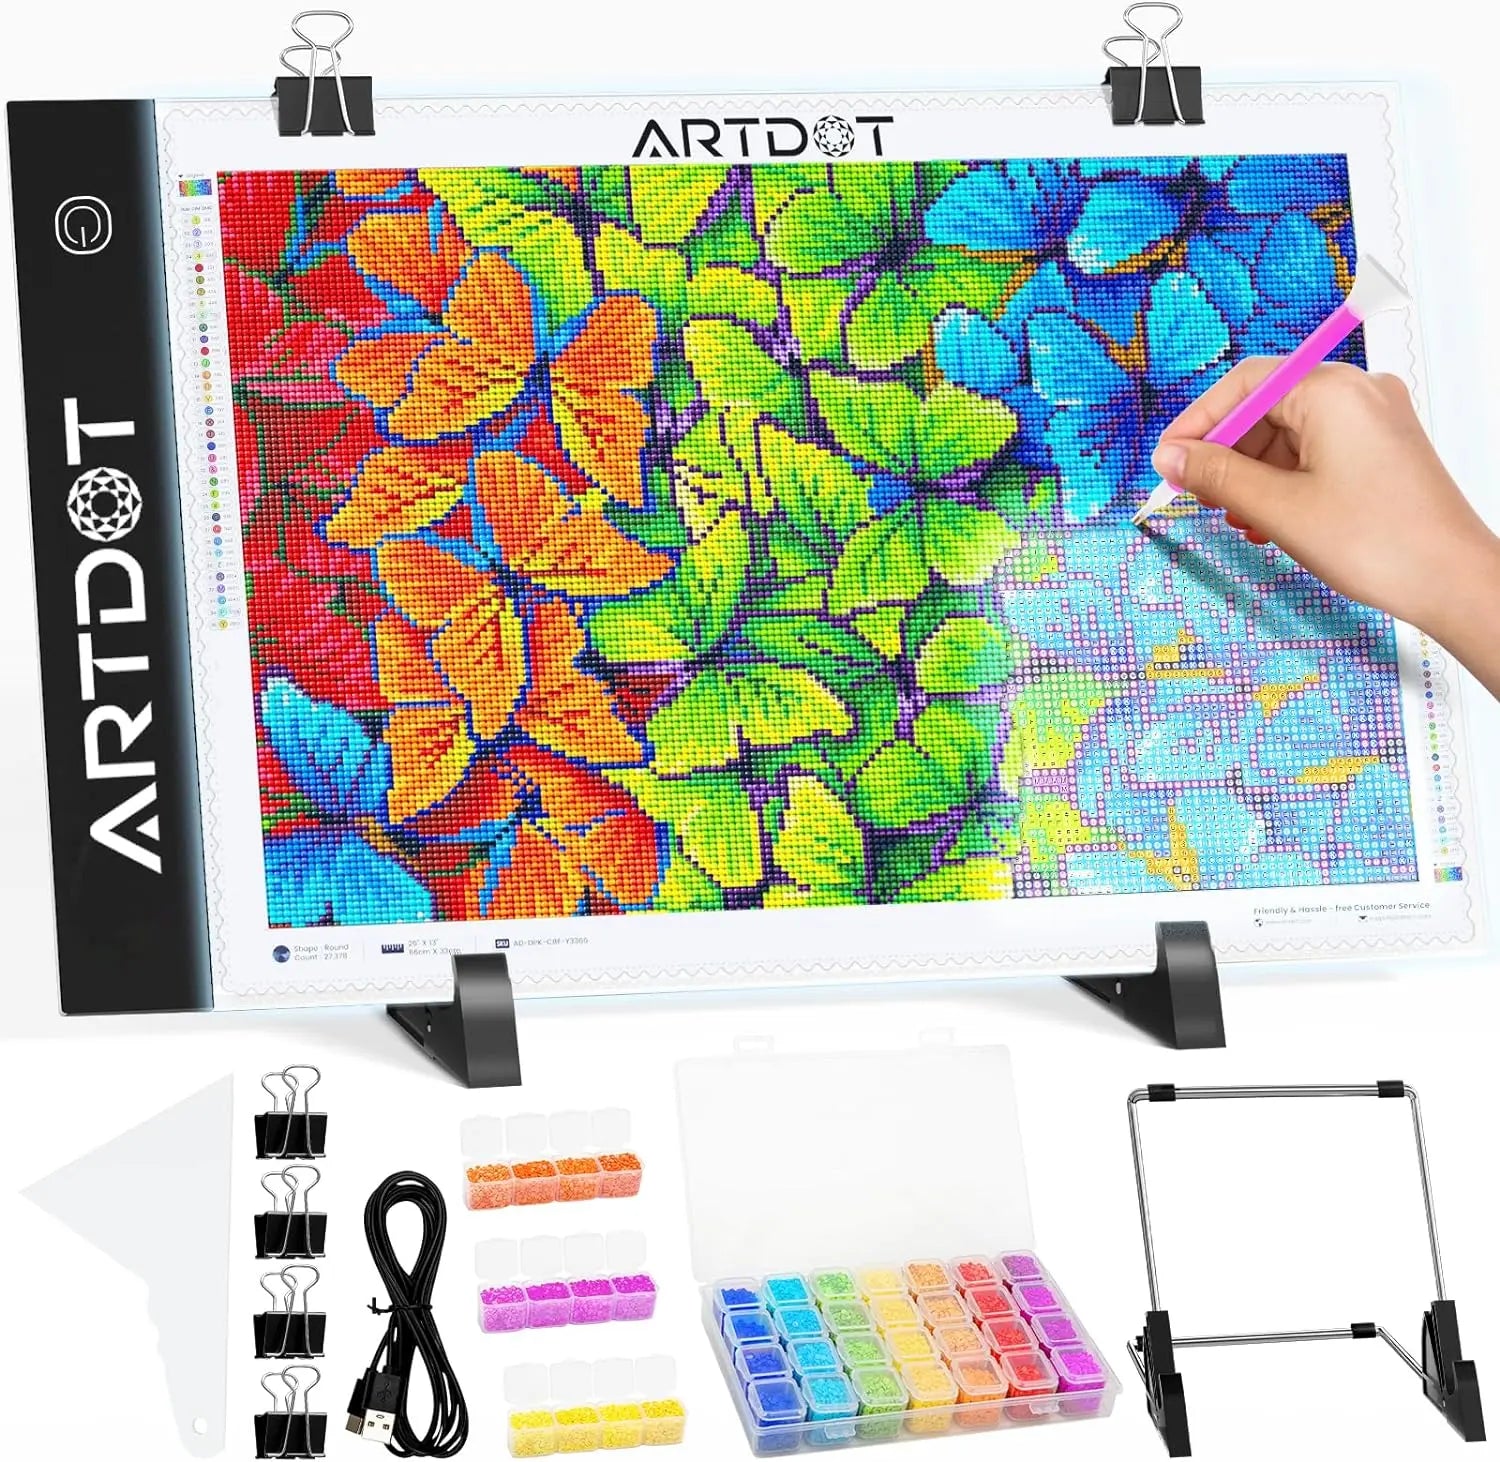  ARTDOT 4 Pack 5D Diamond Painting Kits for Adults Full